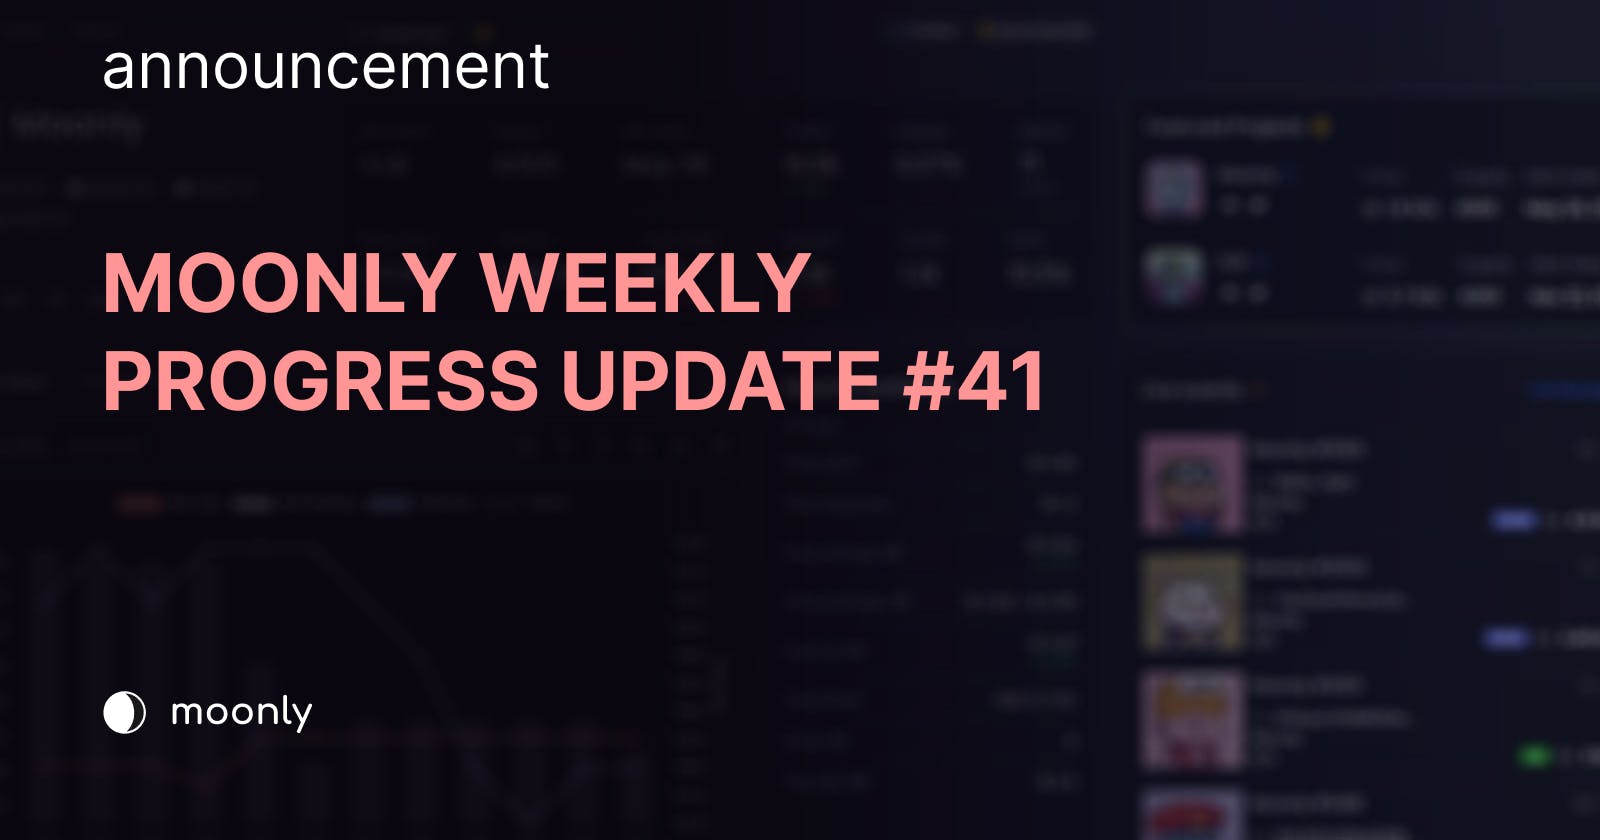 Moonly weekly progress update #41